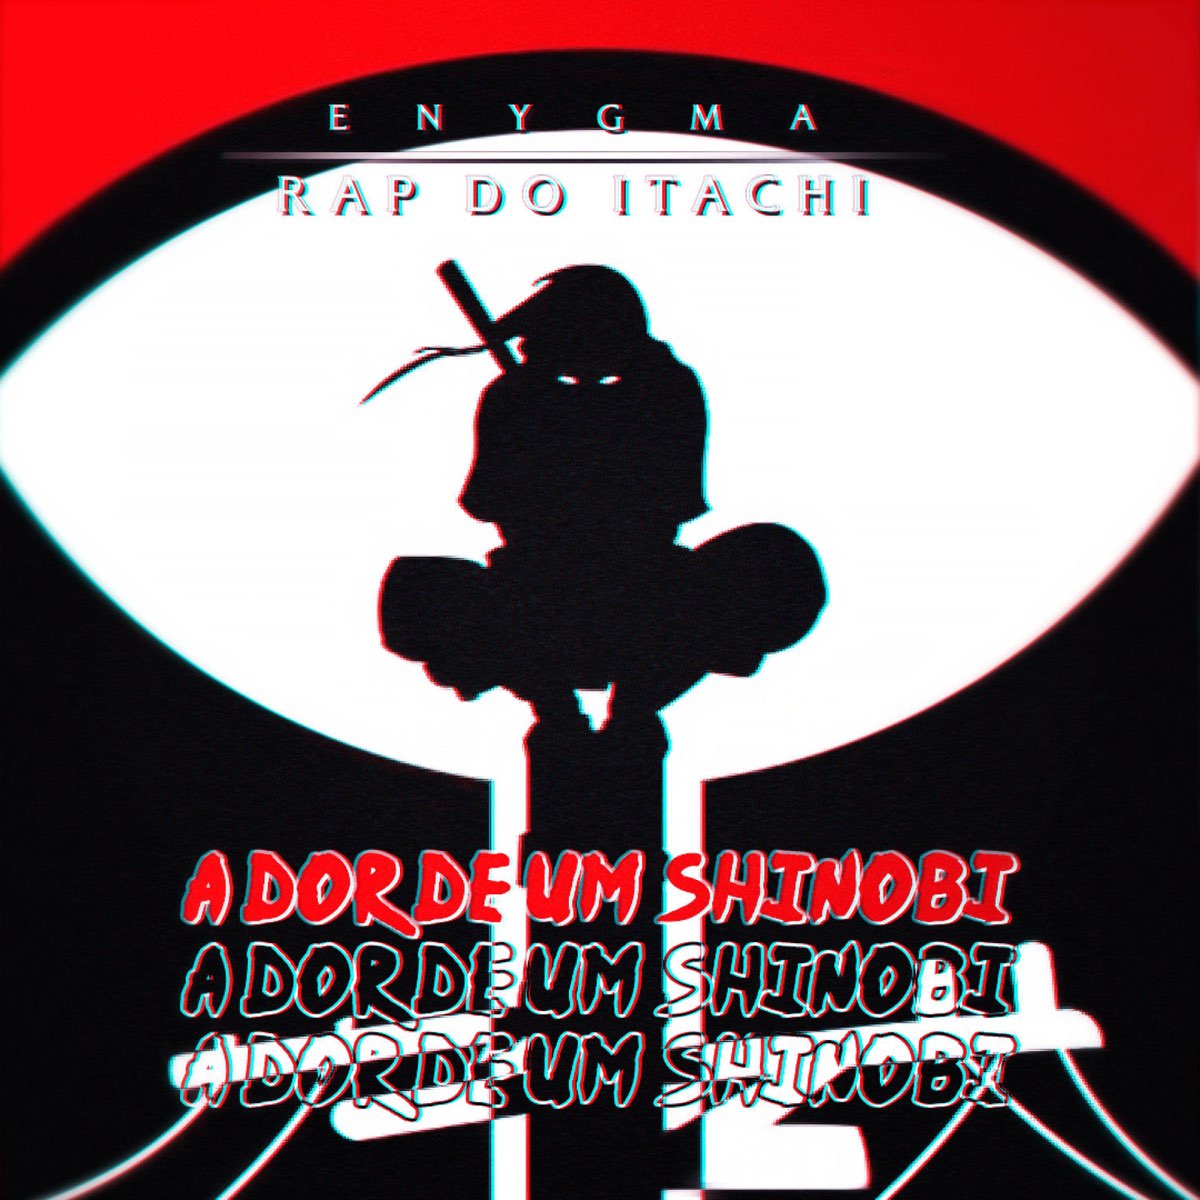 Rap do Minato, Naruto E Boruto: Por Konoha - Single - Album by Enygma  Rapper - Apple Music